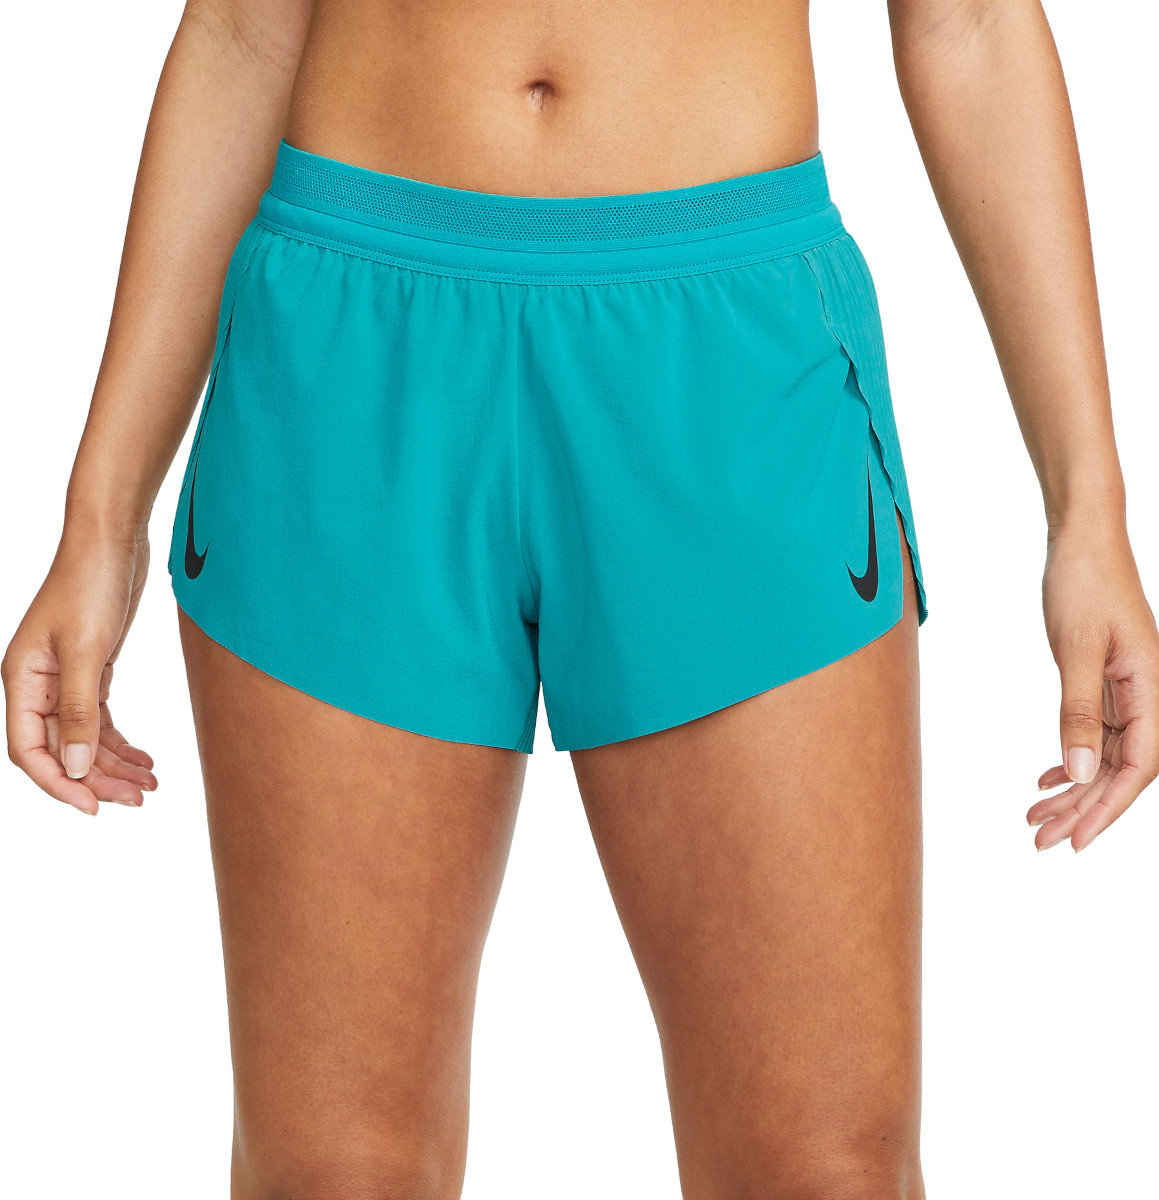 Nike AeroSwift Running Shorts - Running Shorts Women's, Buy online